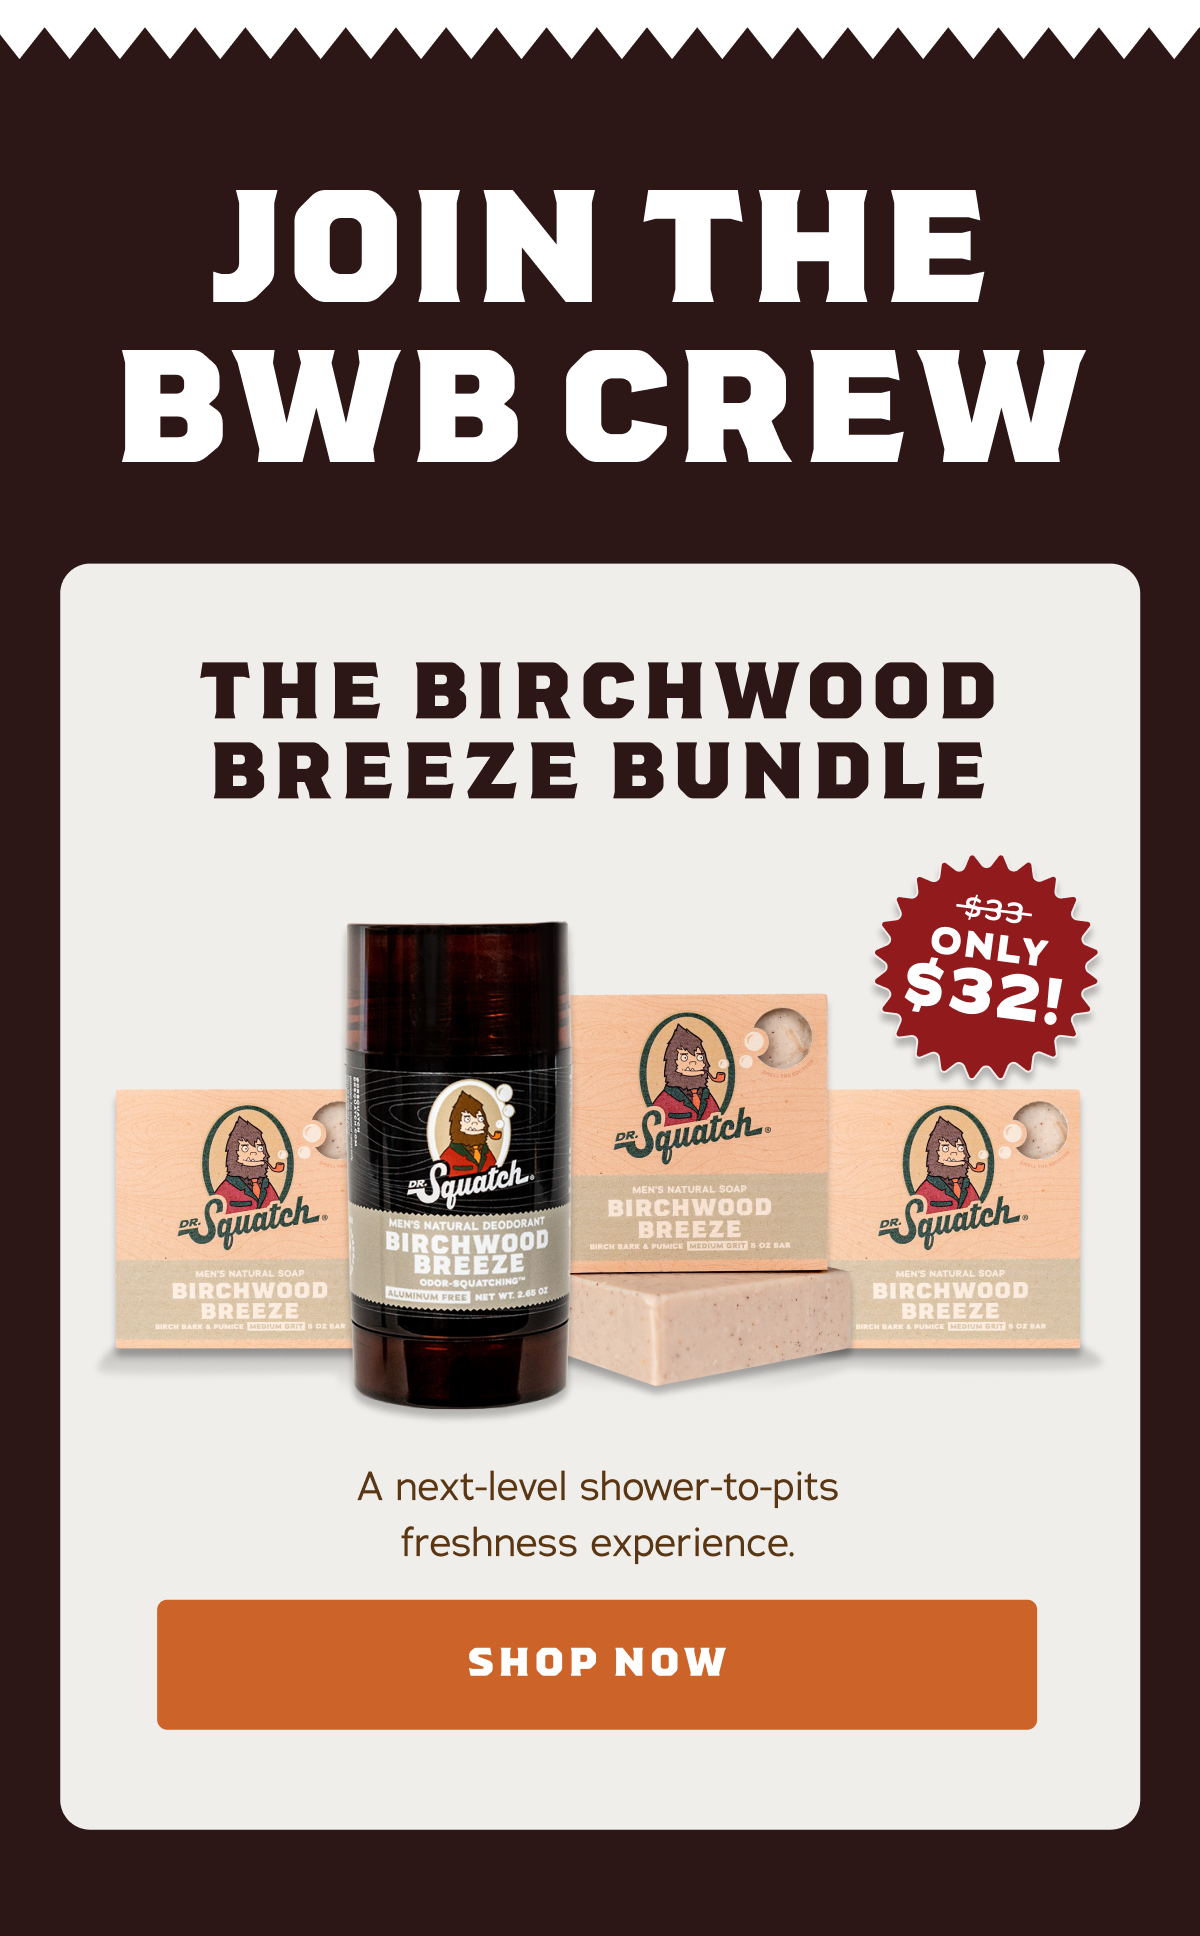 Dr. Squatch: Three words: Birchwood Breeze Bundle